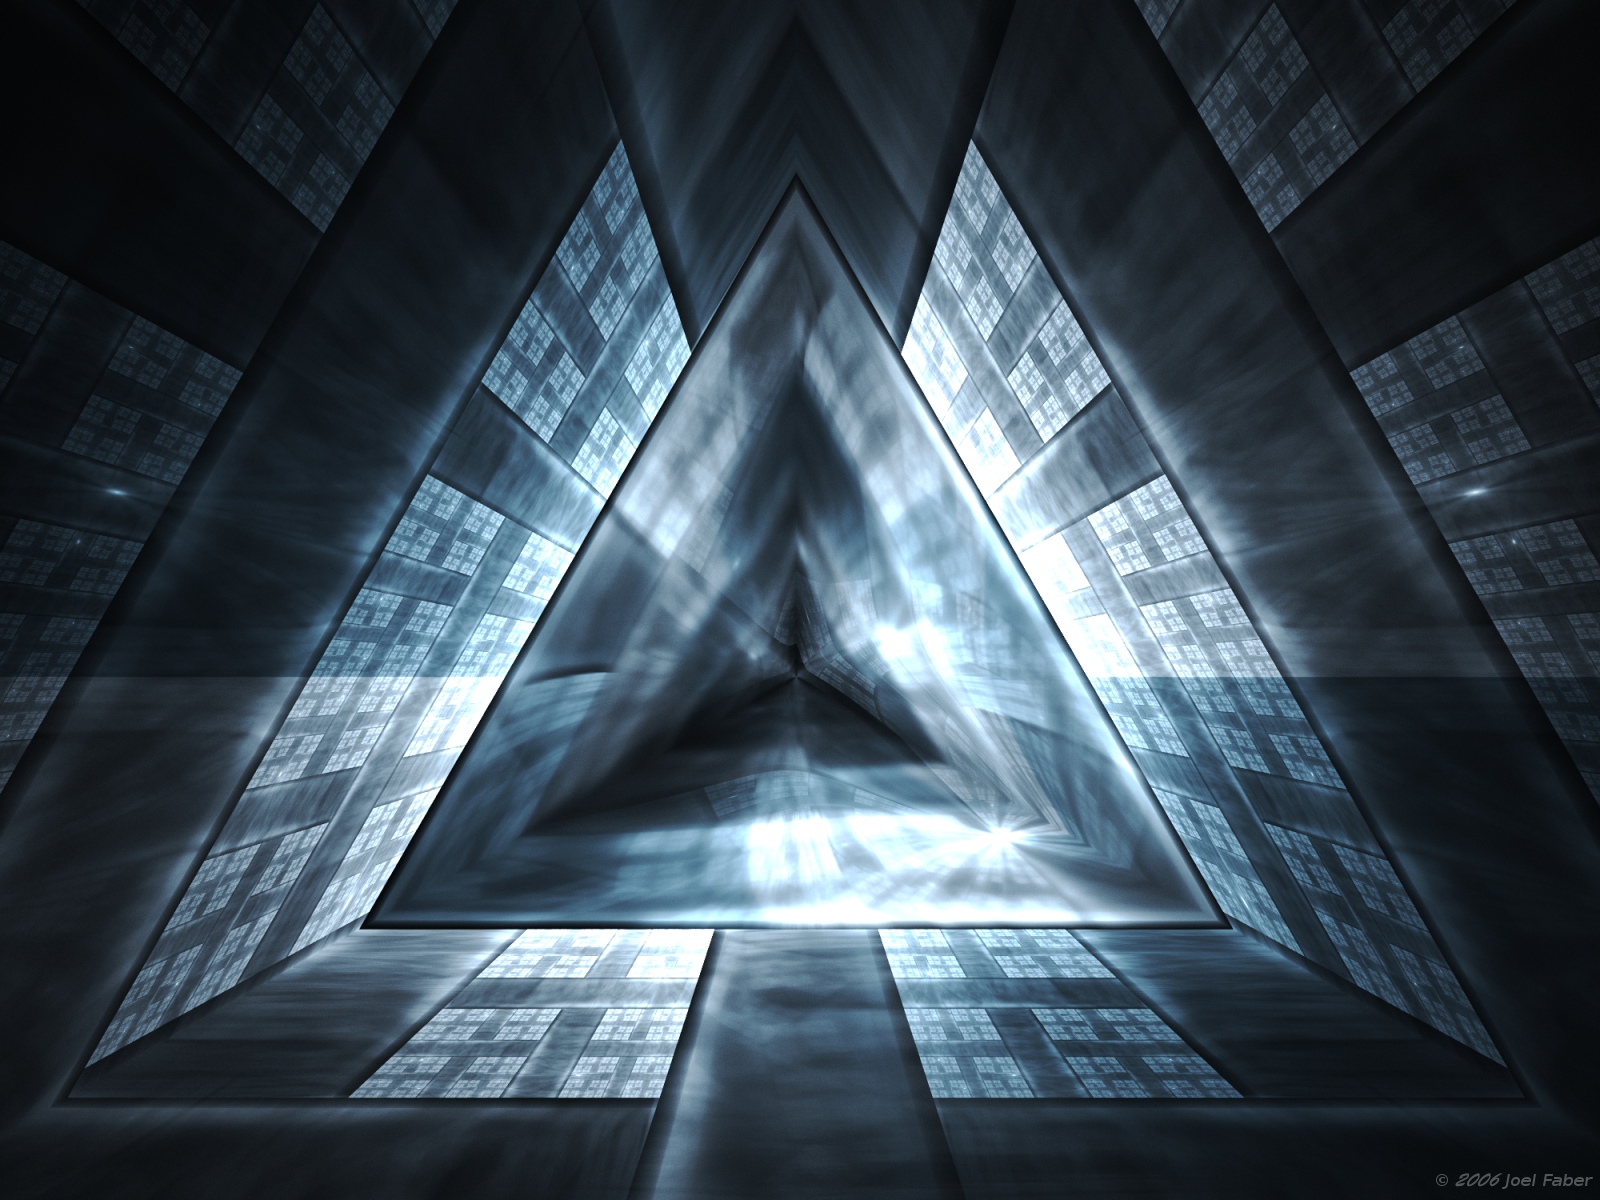 Sci-fi artistic desktop wallpaper: The Portal by Joel Faber. Features a mesmerizing triangle design.